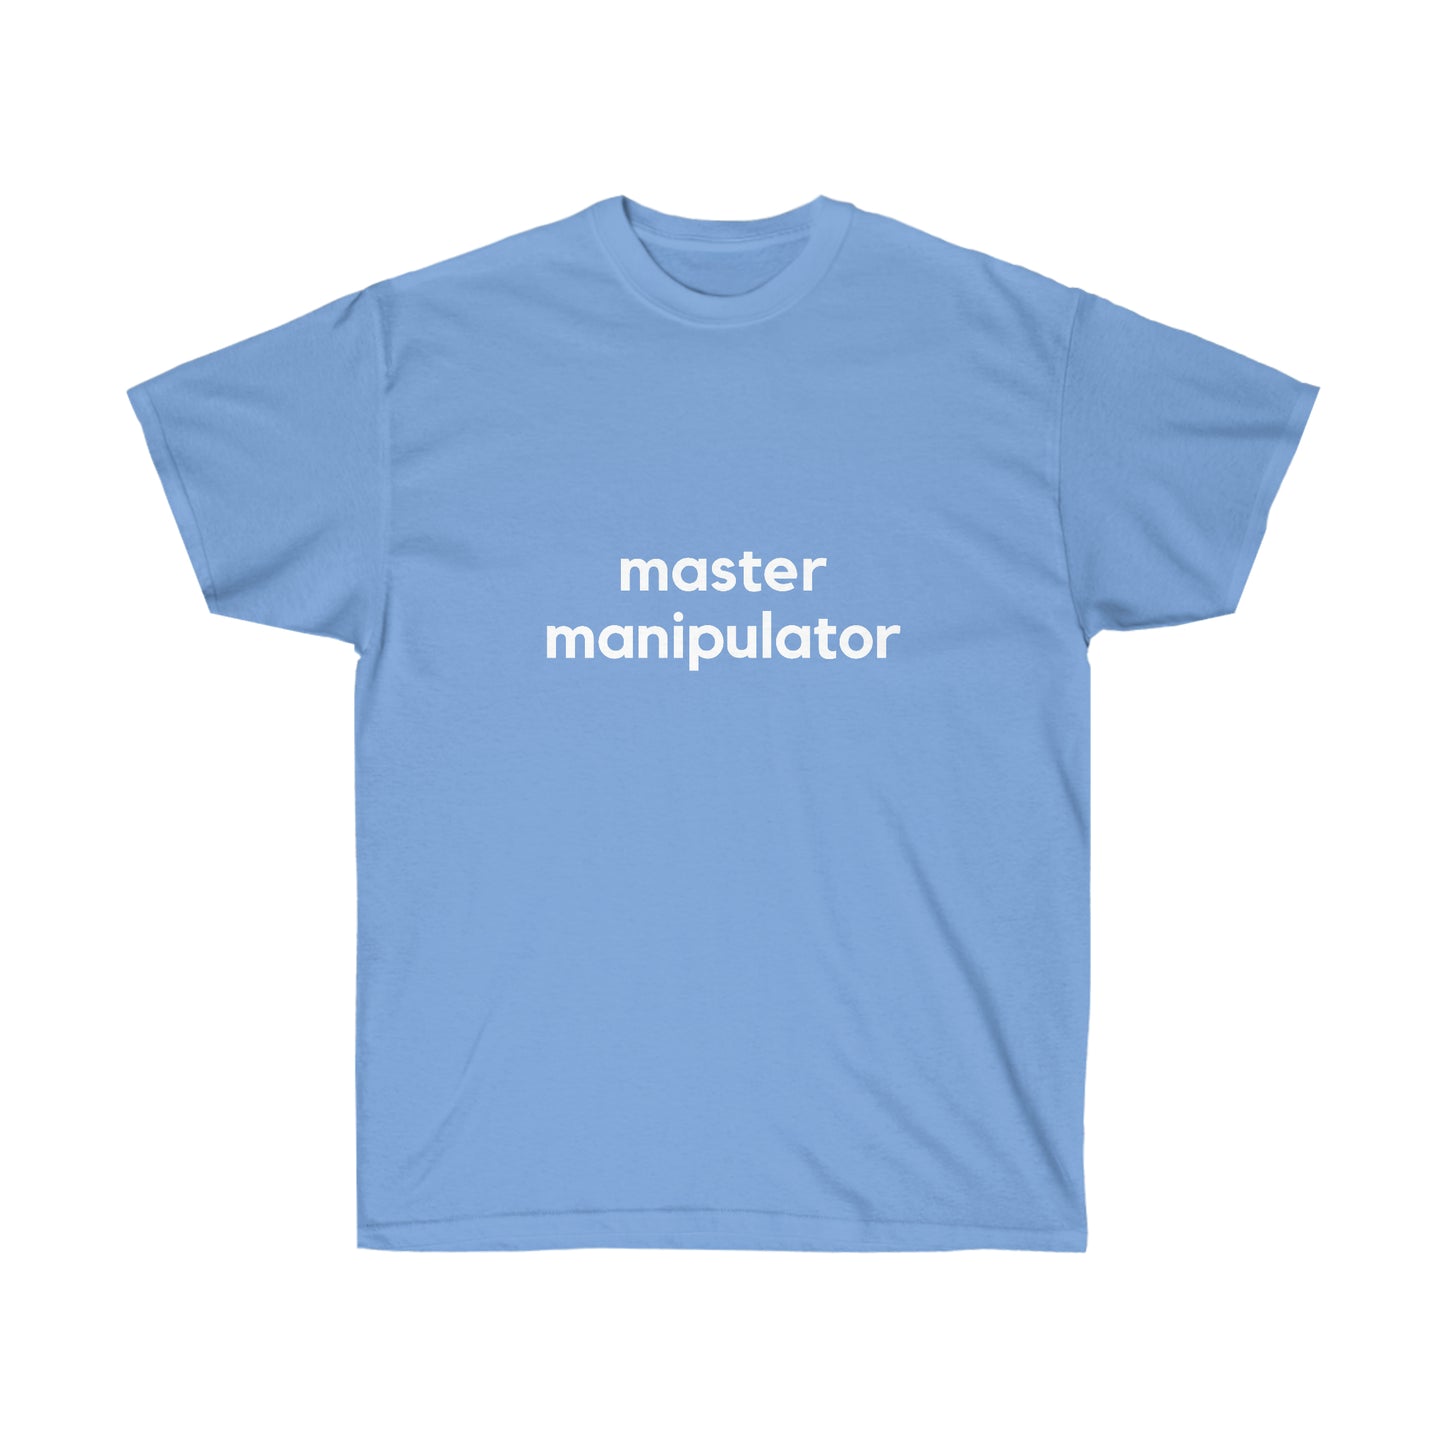 Master manipulator | Couple tee